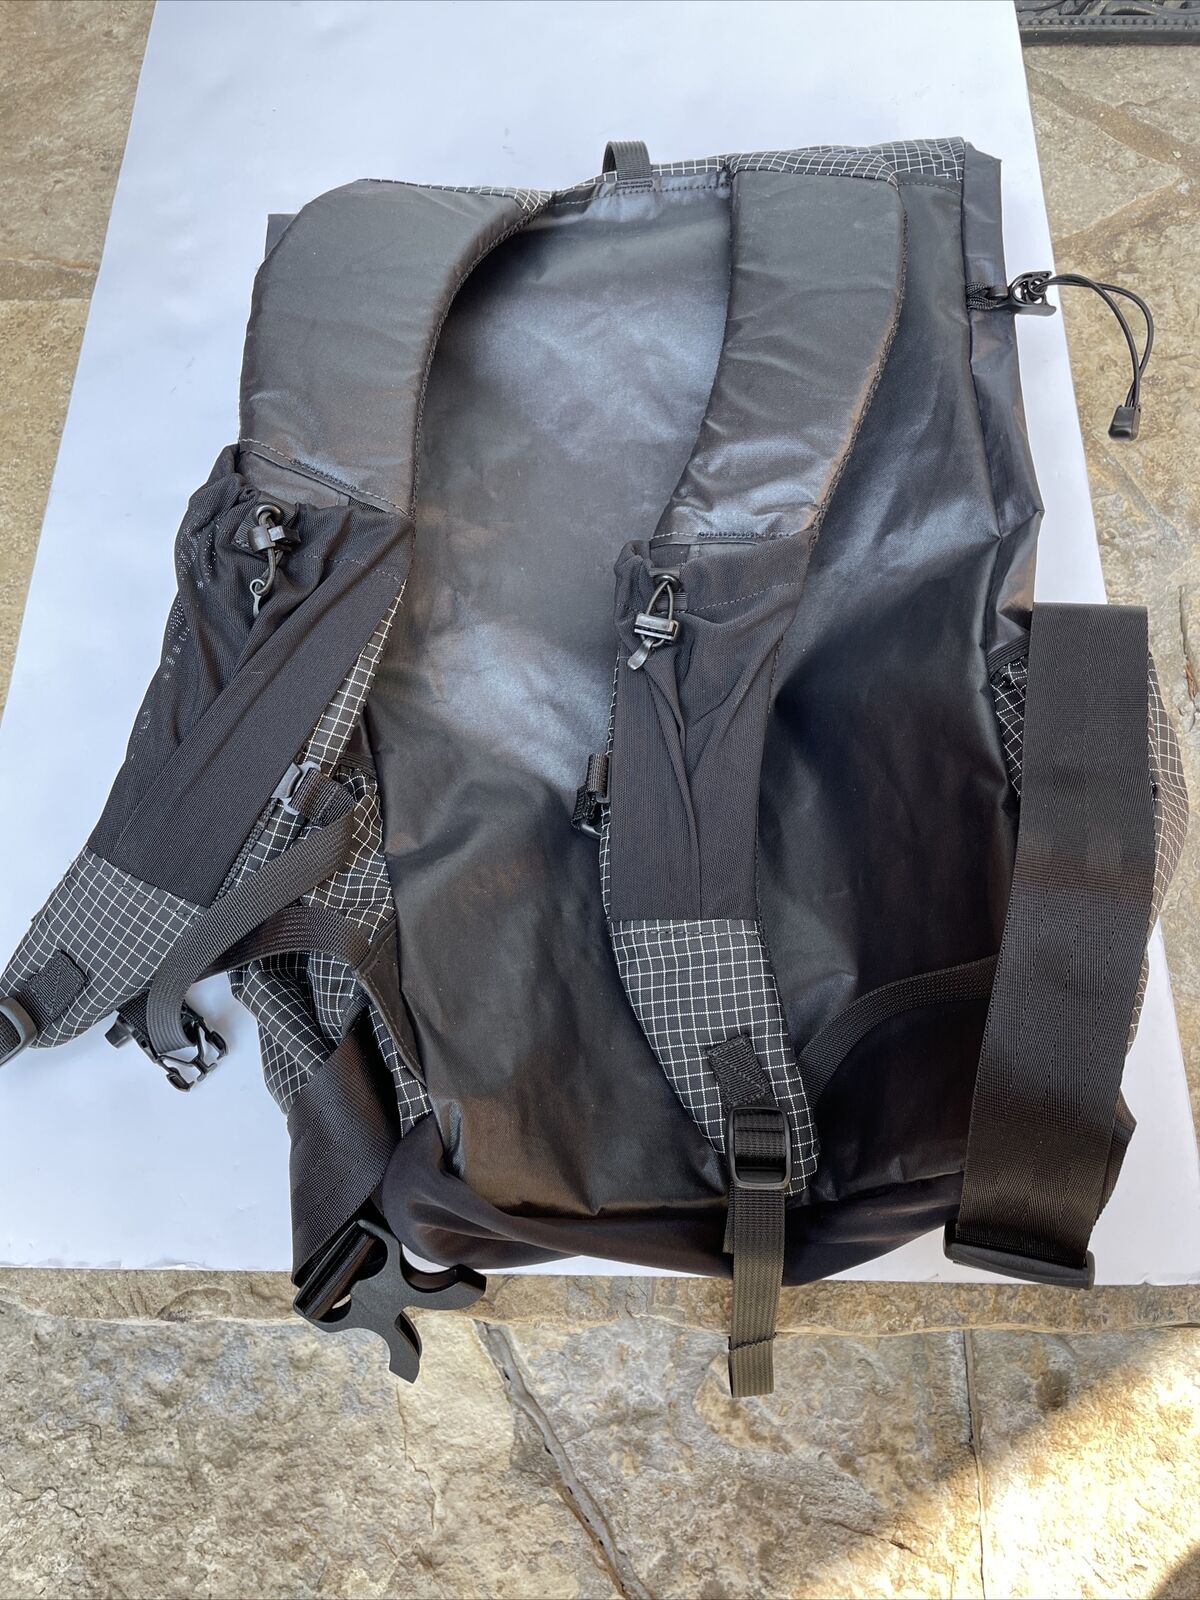 Palante Packs Black W Hip belt Hiking Backpack Ultralight ~ 19” torso